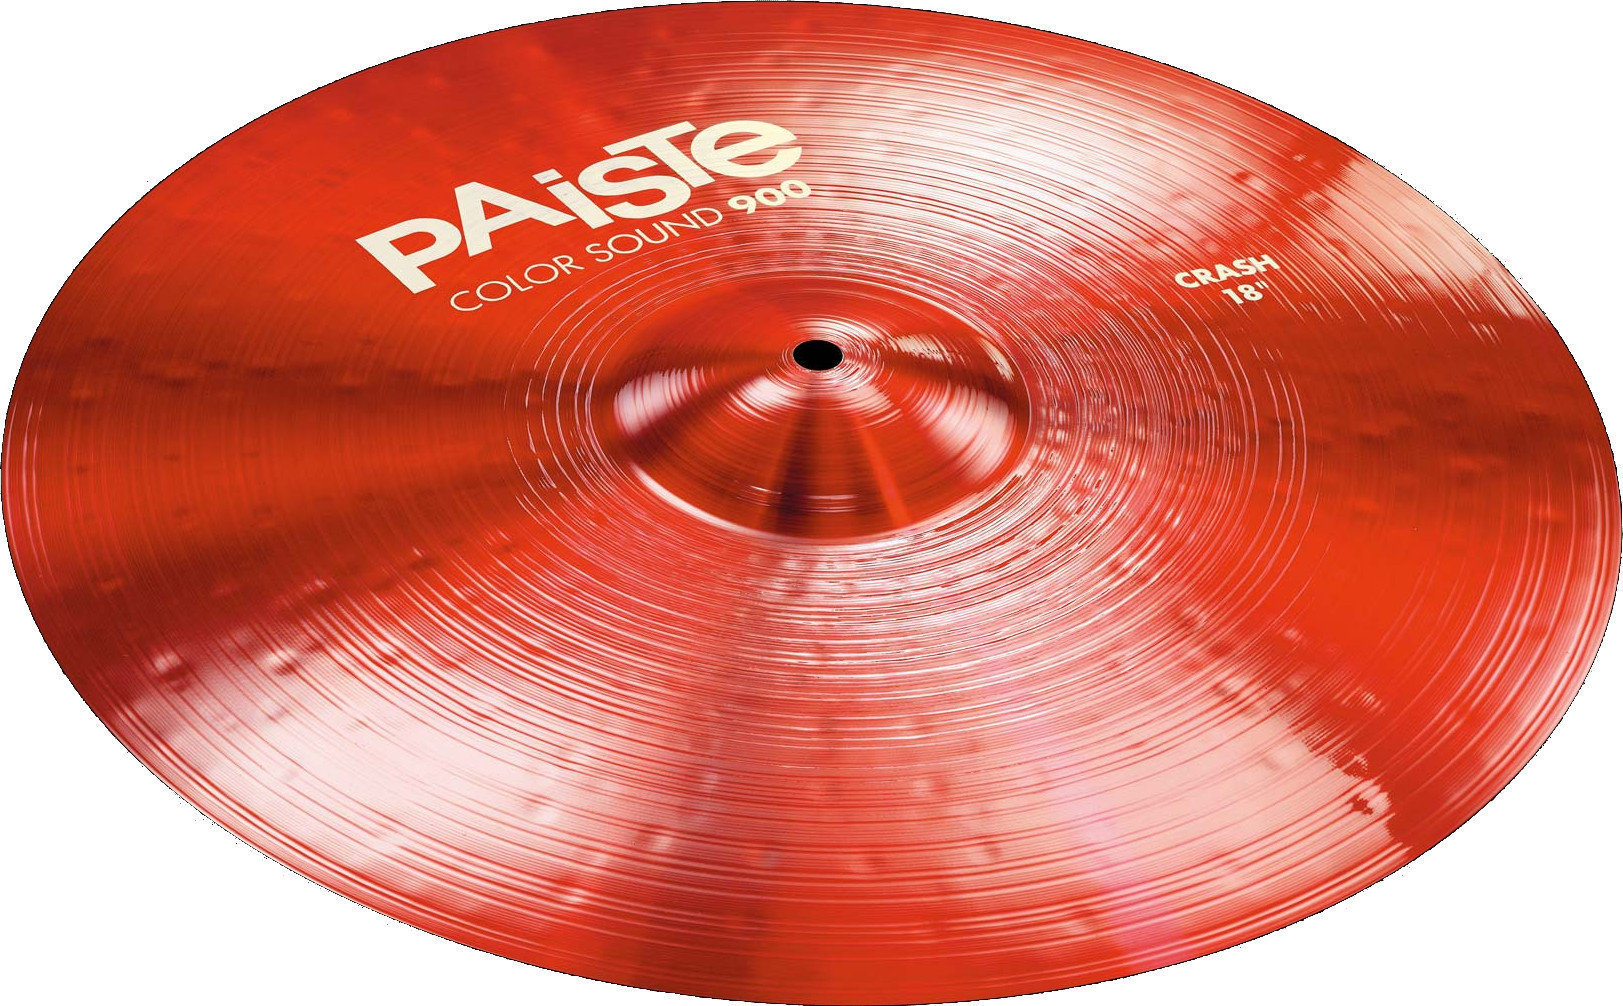 Crash Cymbal Paiste Color Sound 900 Crash Cymbal 18" Red